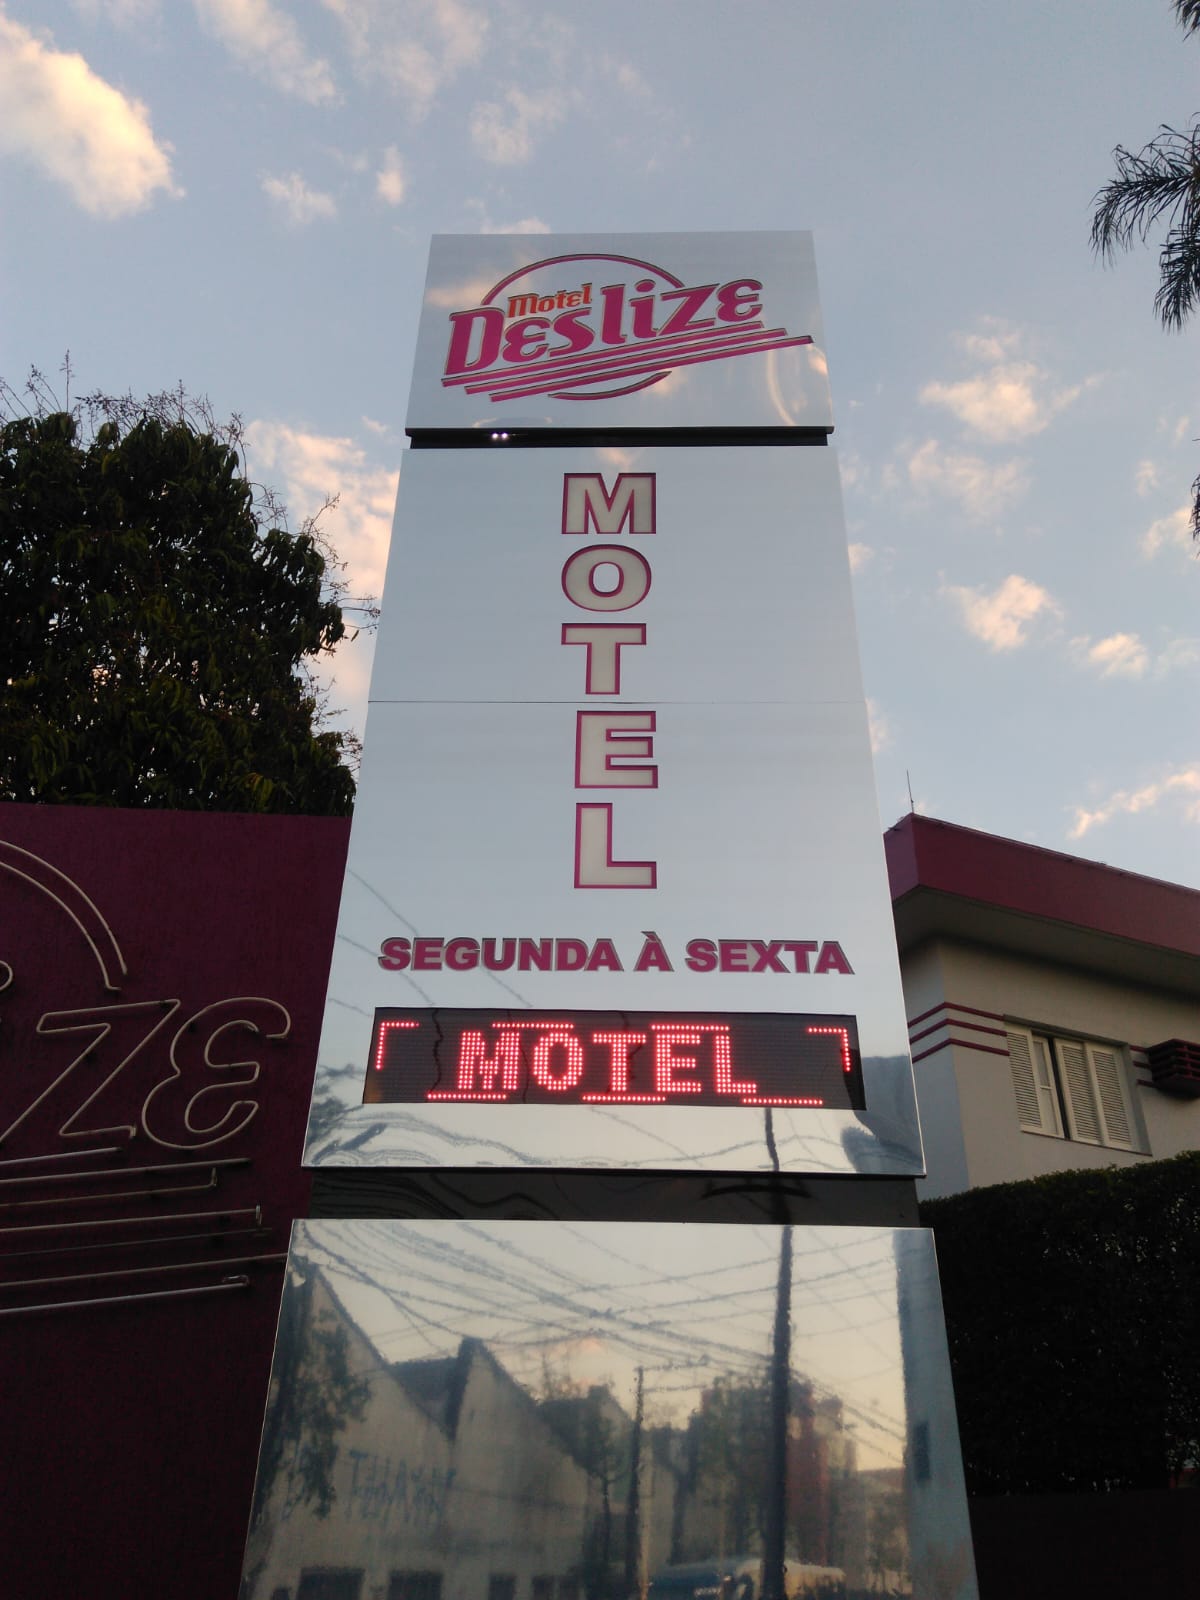 Motel Deslize